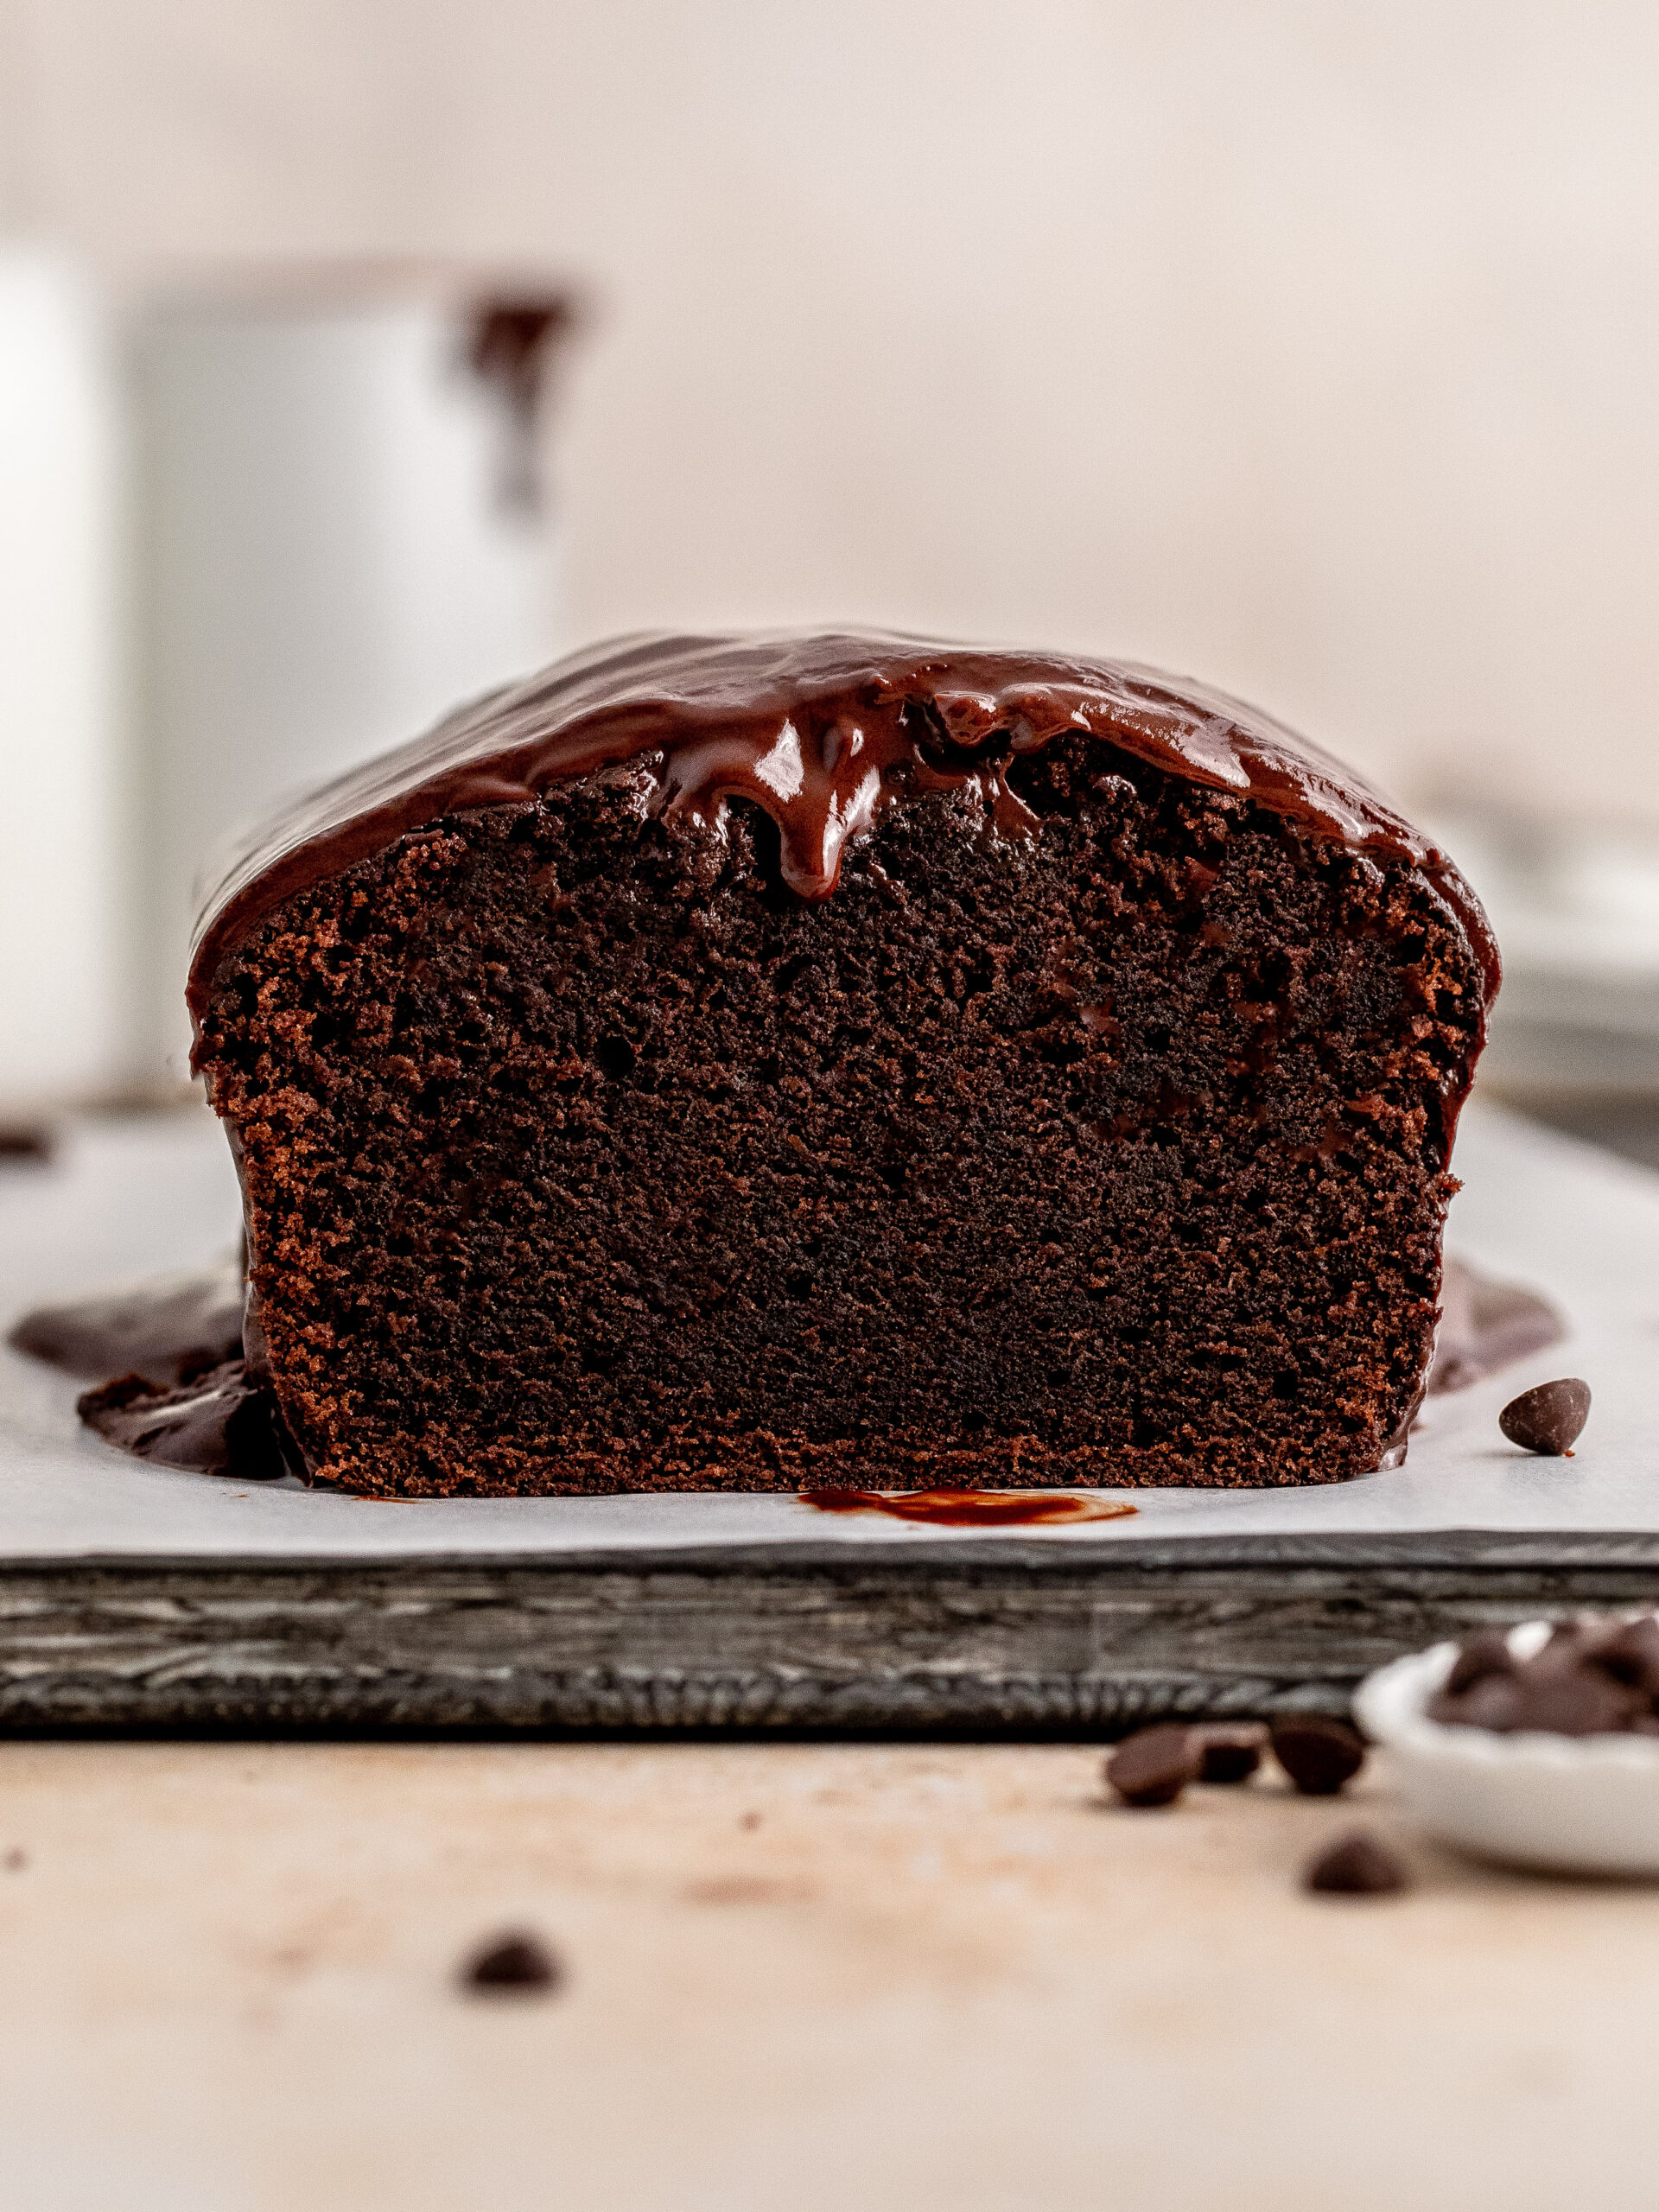 The Best Pound Cake | America's Test Kitchen Recipe